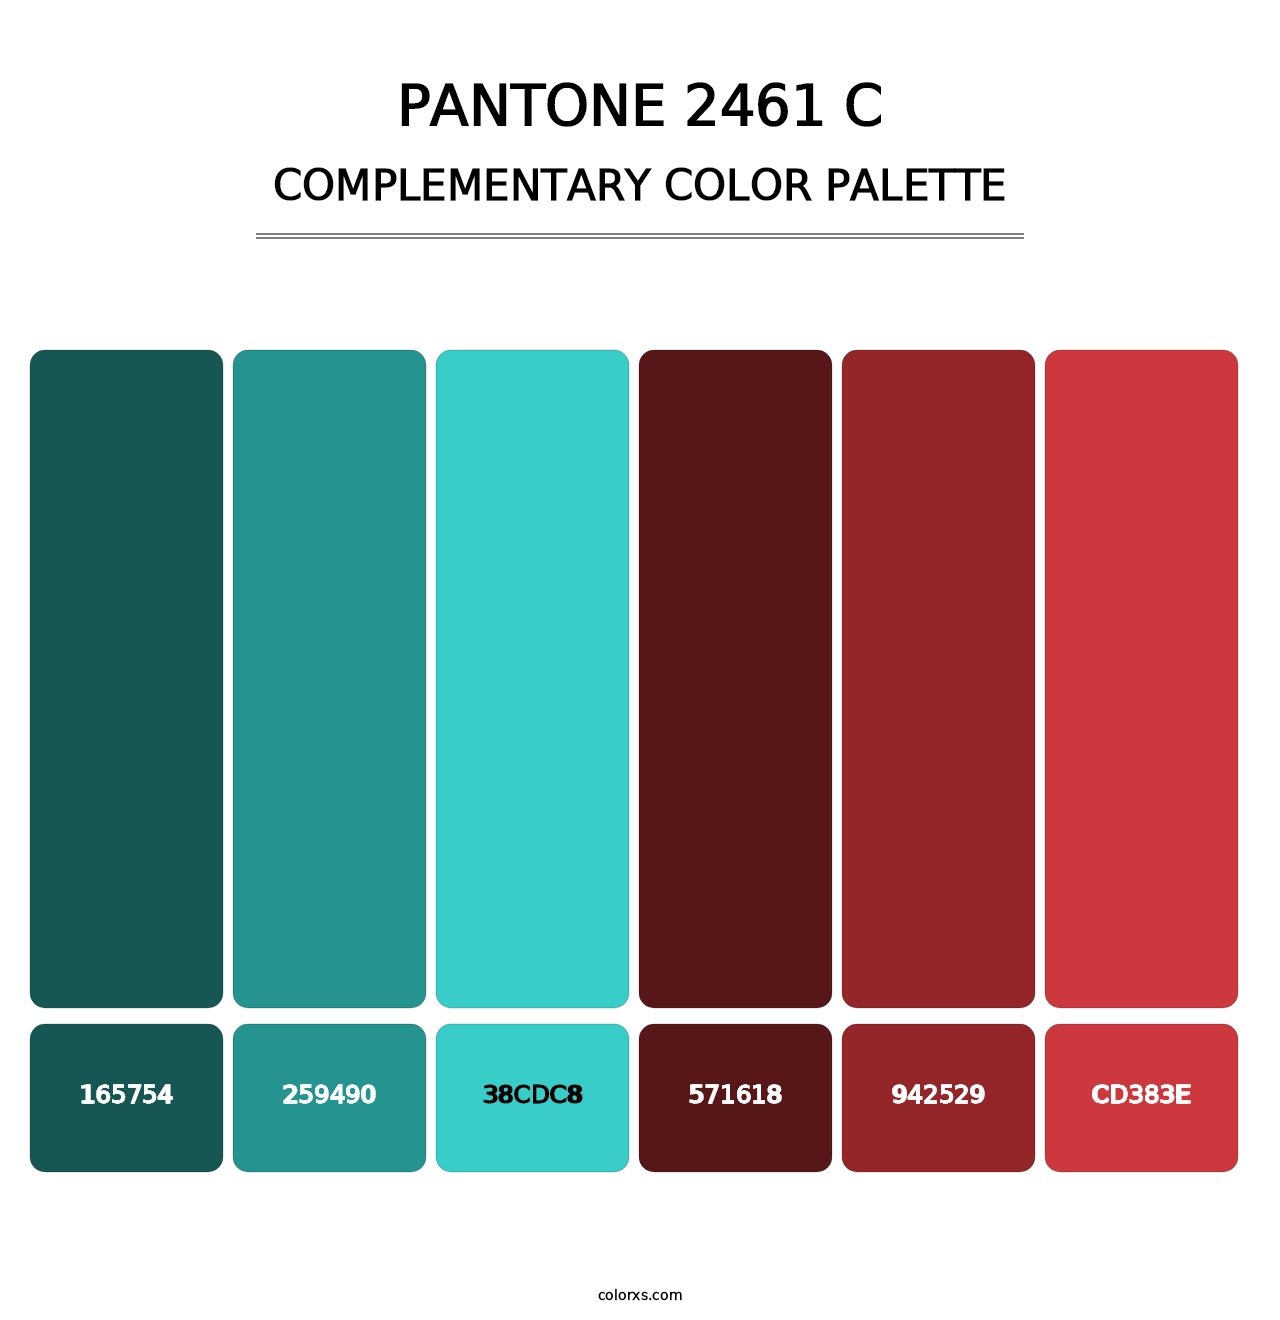 PANTONE 2461 C - Complementary Color Palette